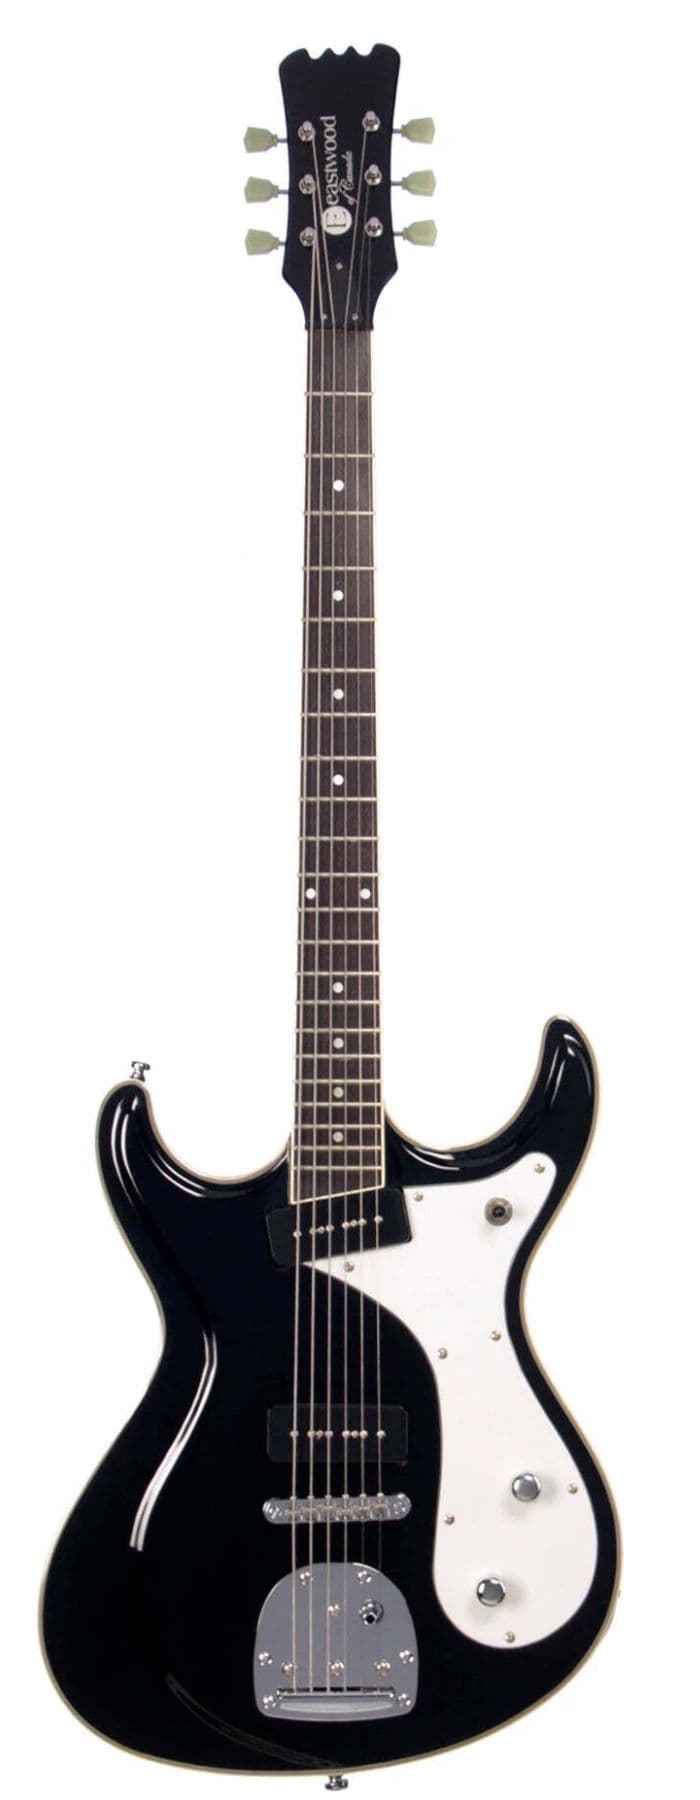 Sidejack Baritone DLX Black | Eastwood Guitars